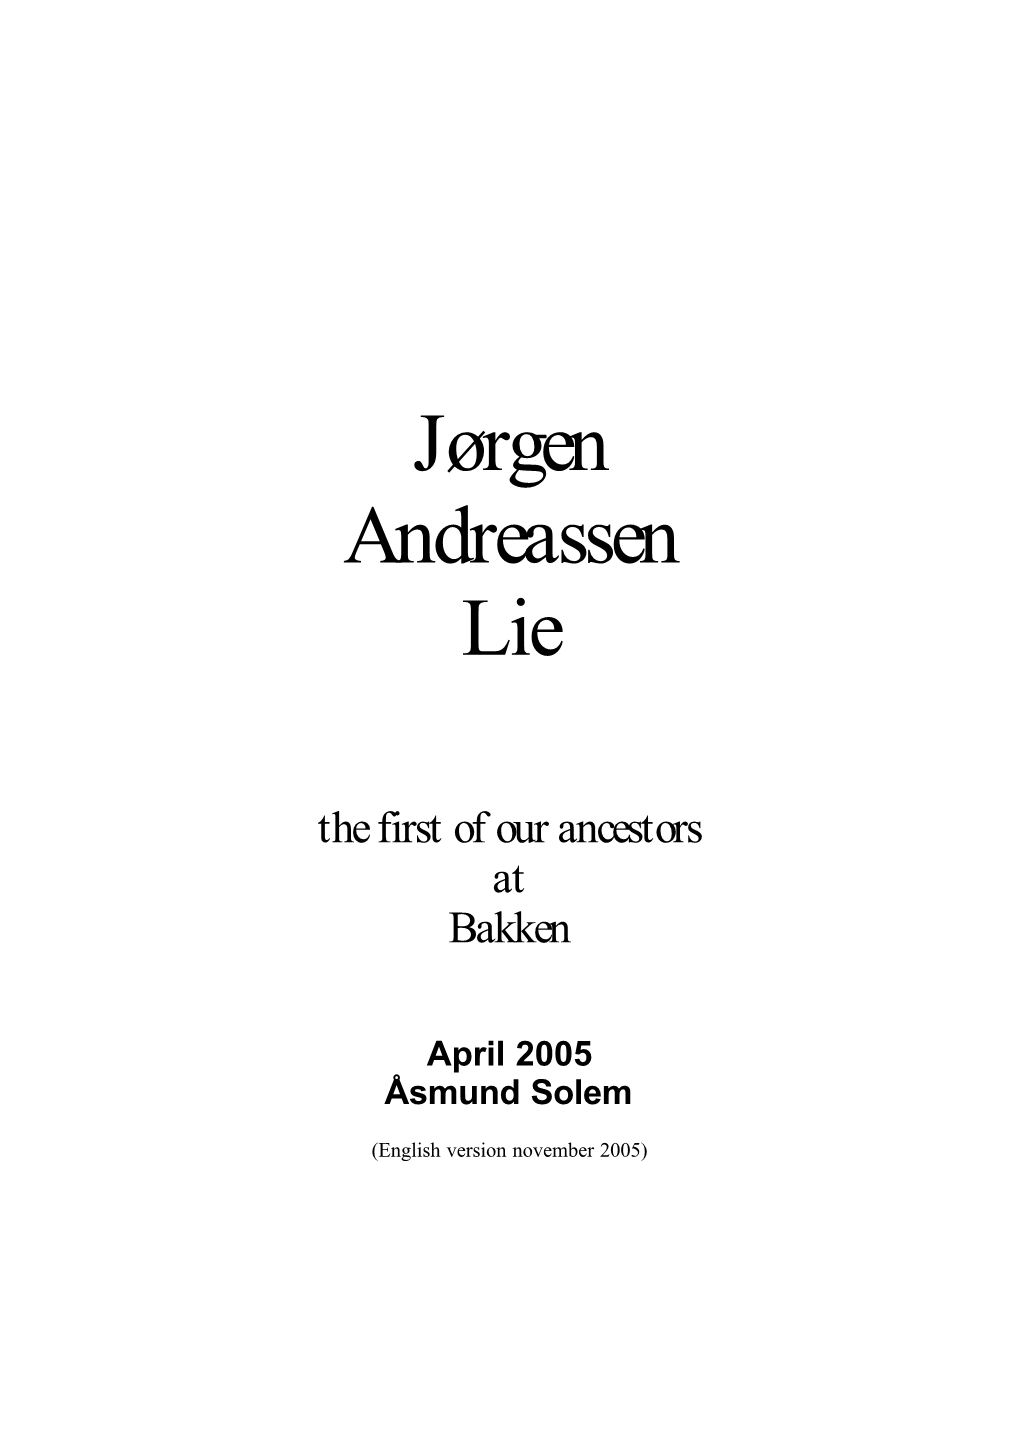 Jørgen Andreassen Lie